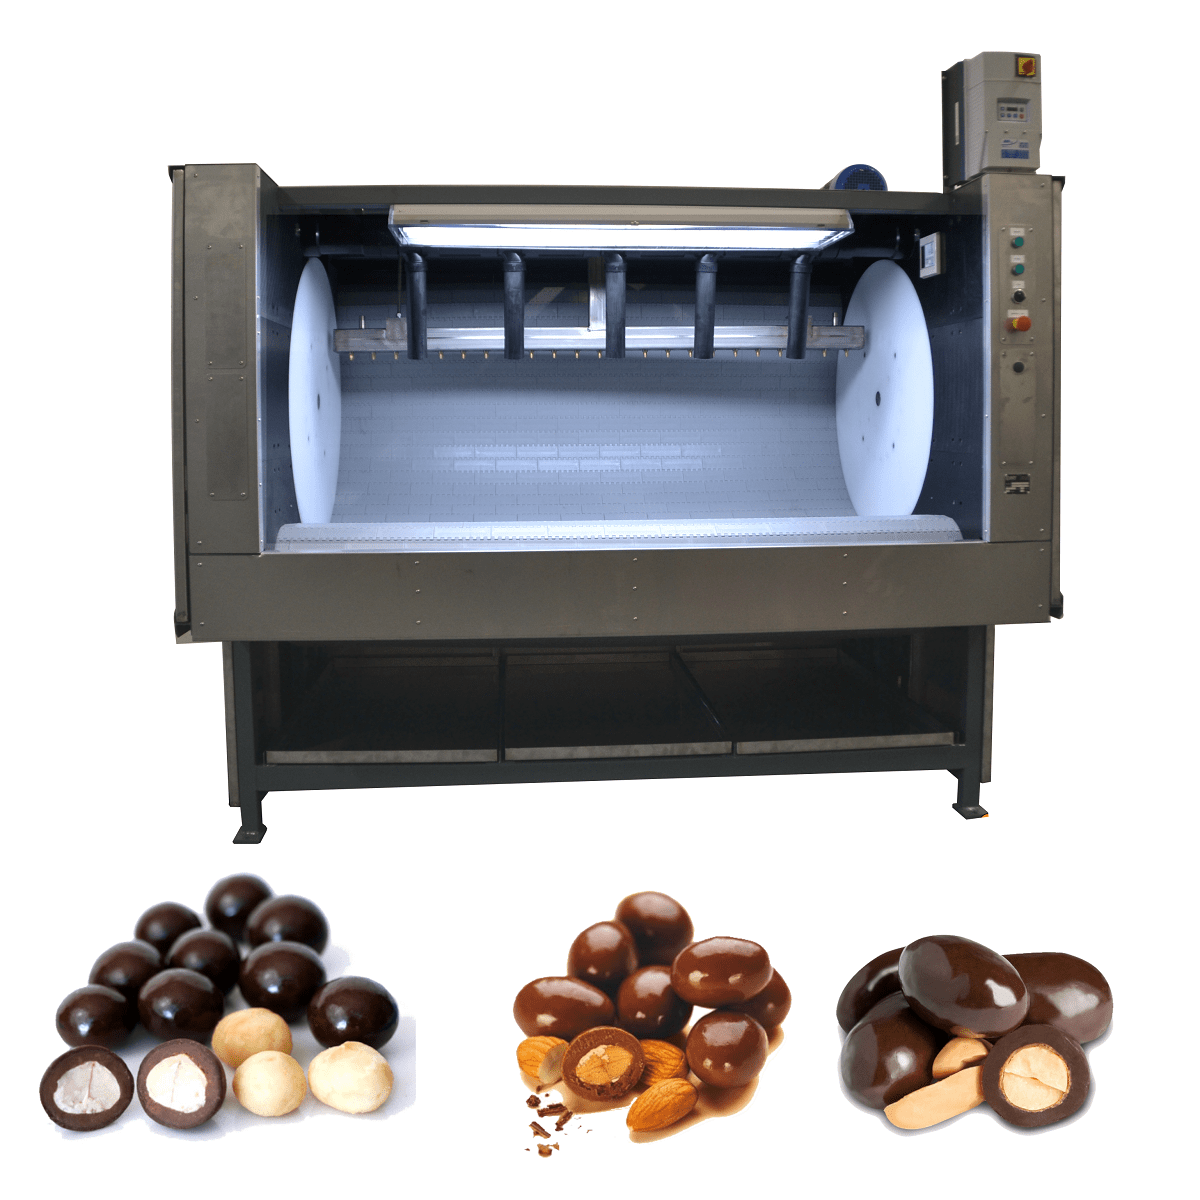 Chocolate coating machine